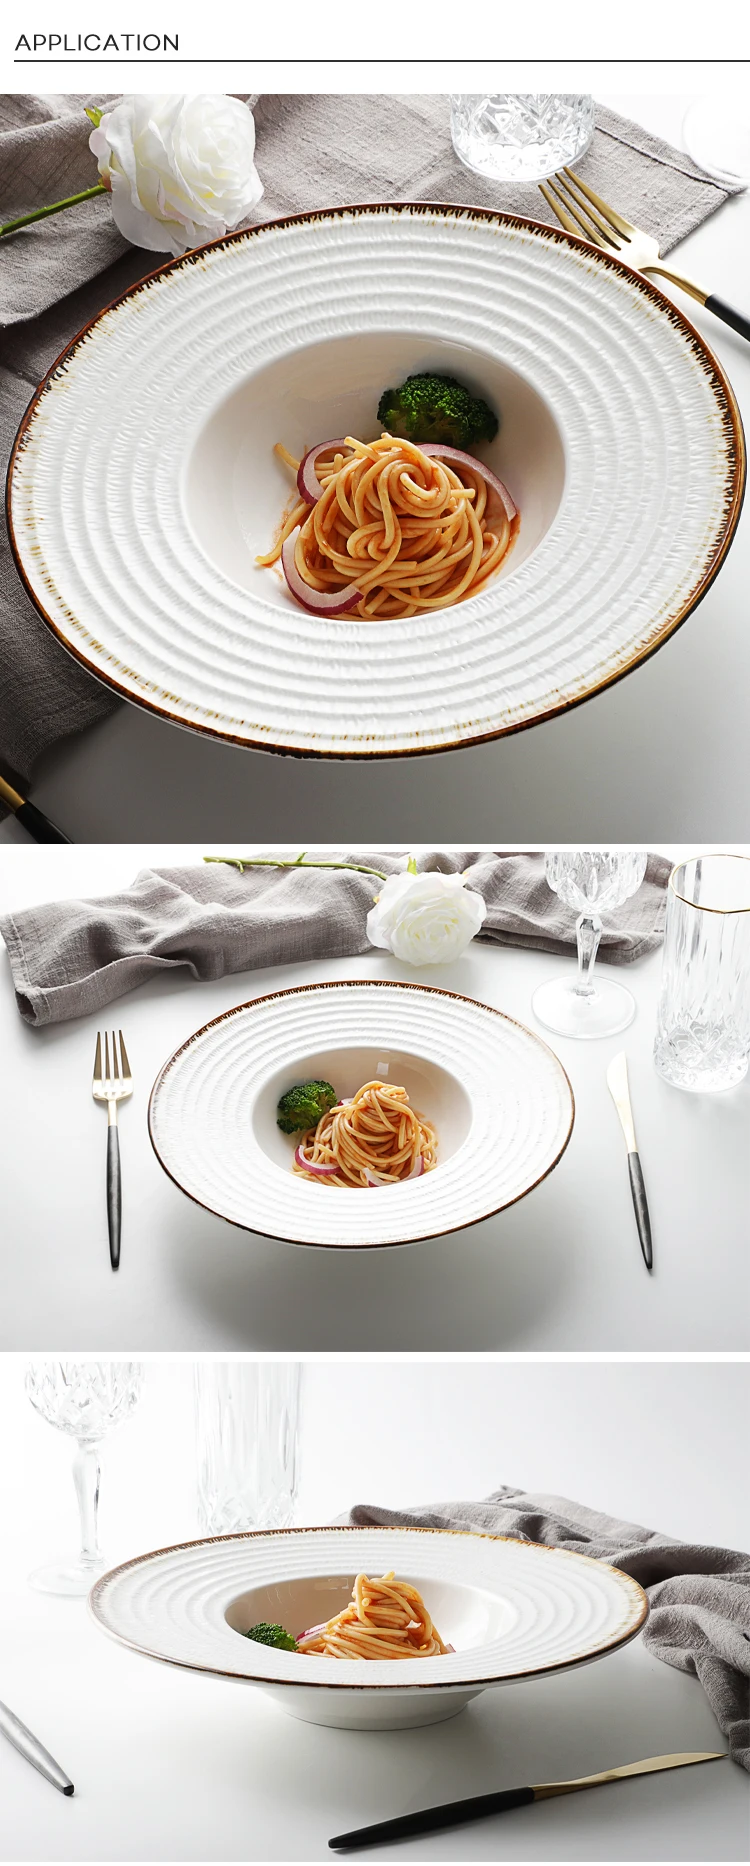 High Quality Modern Restaurant Hotel Quality Plates, Eco-friendly Modern Restaurant Pasta Plates/